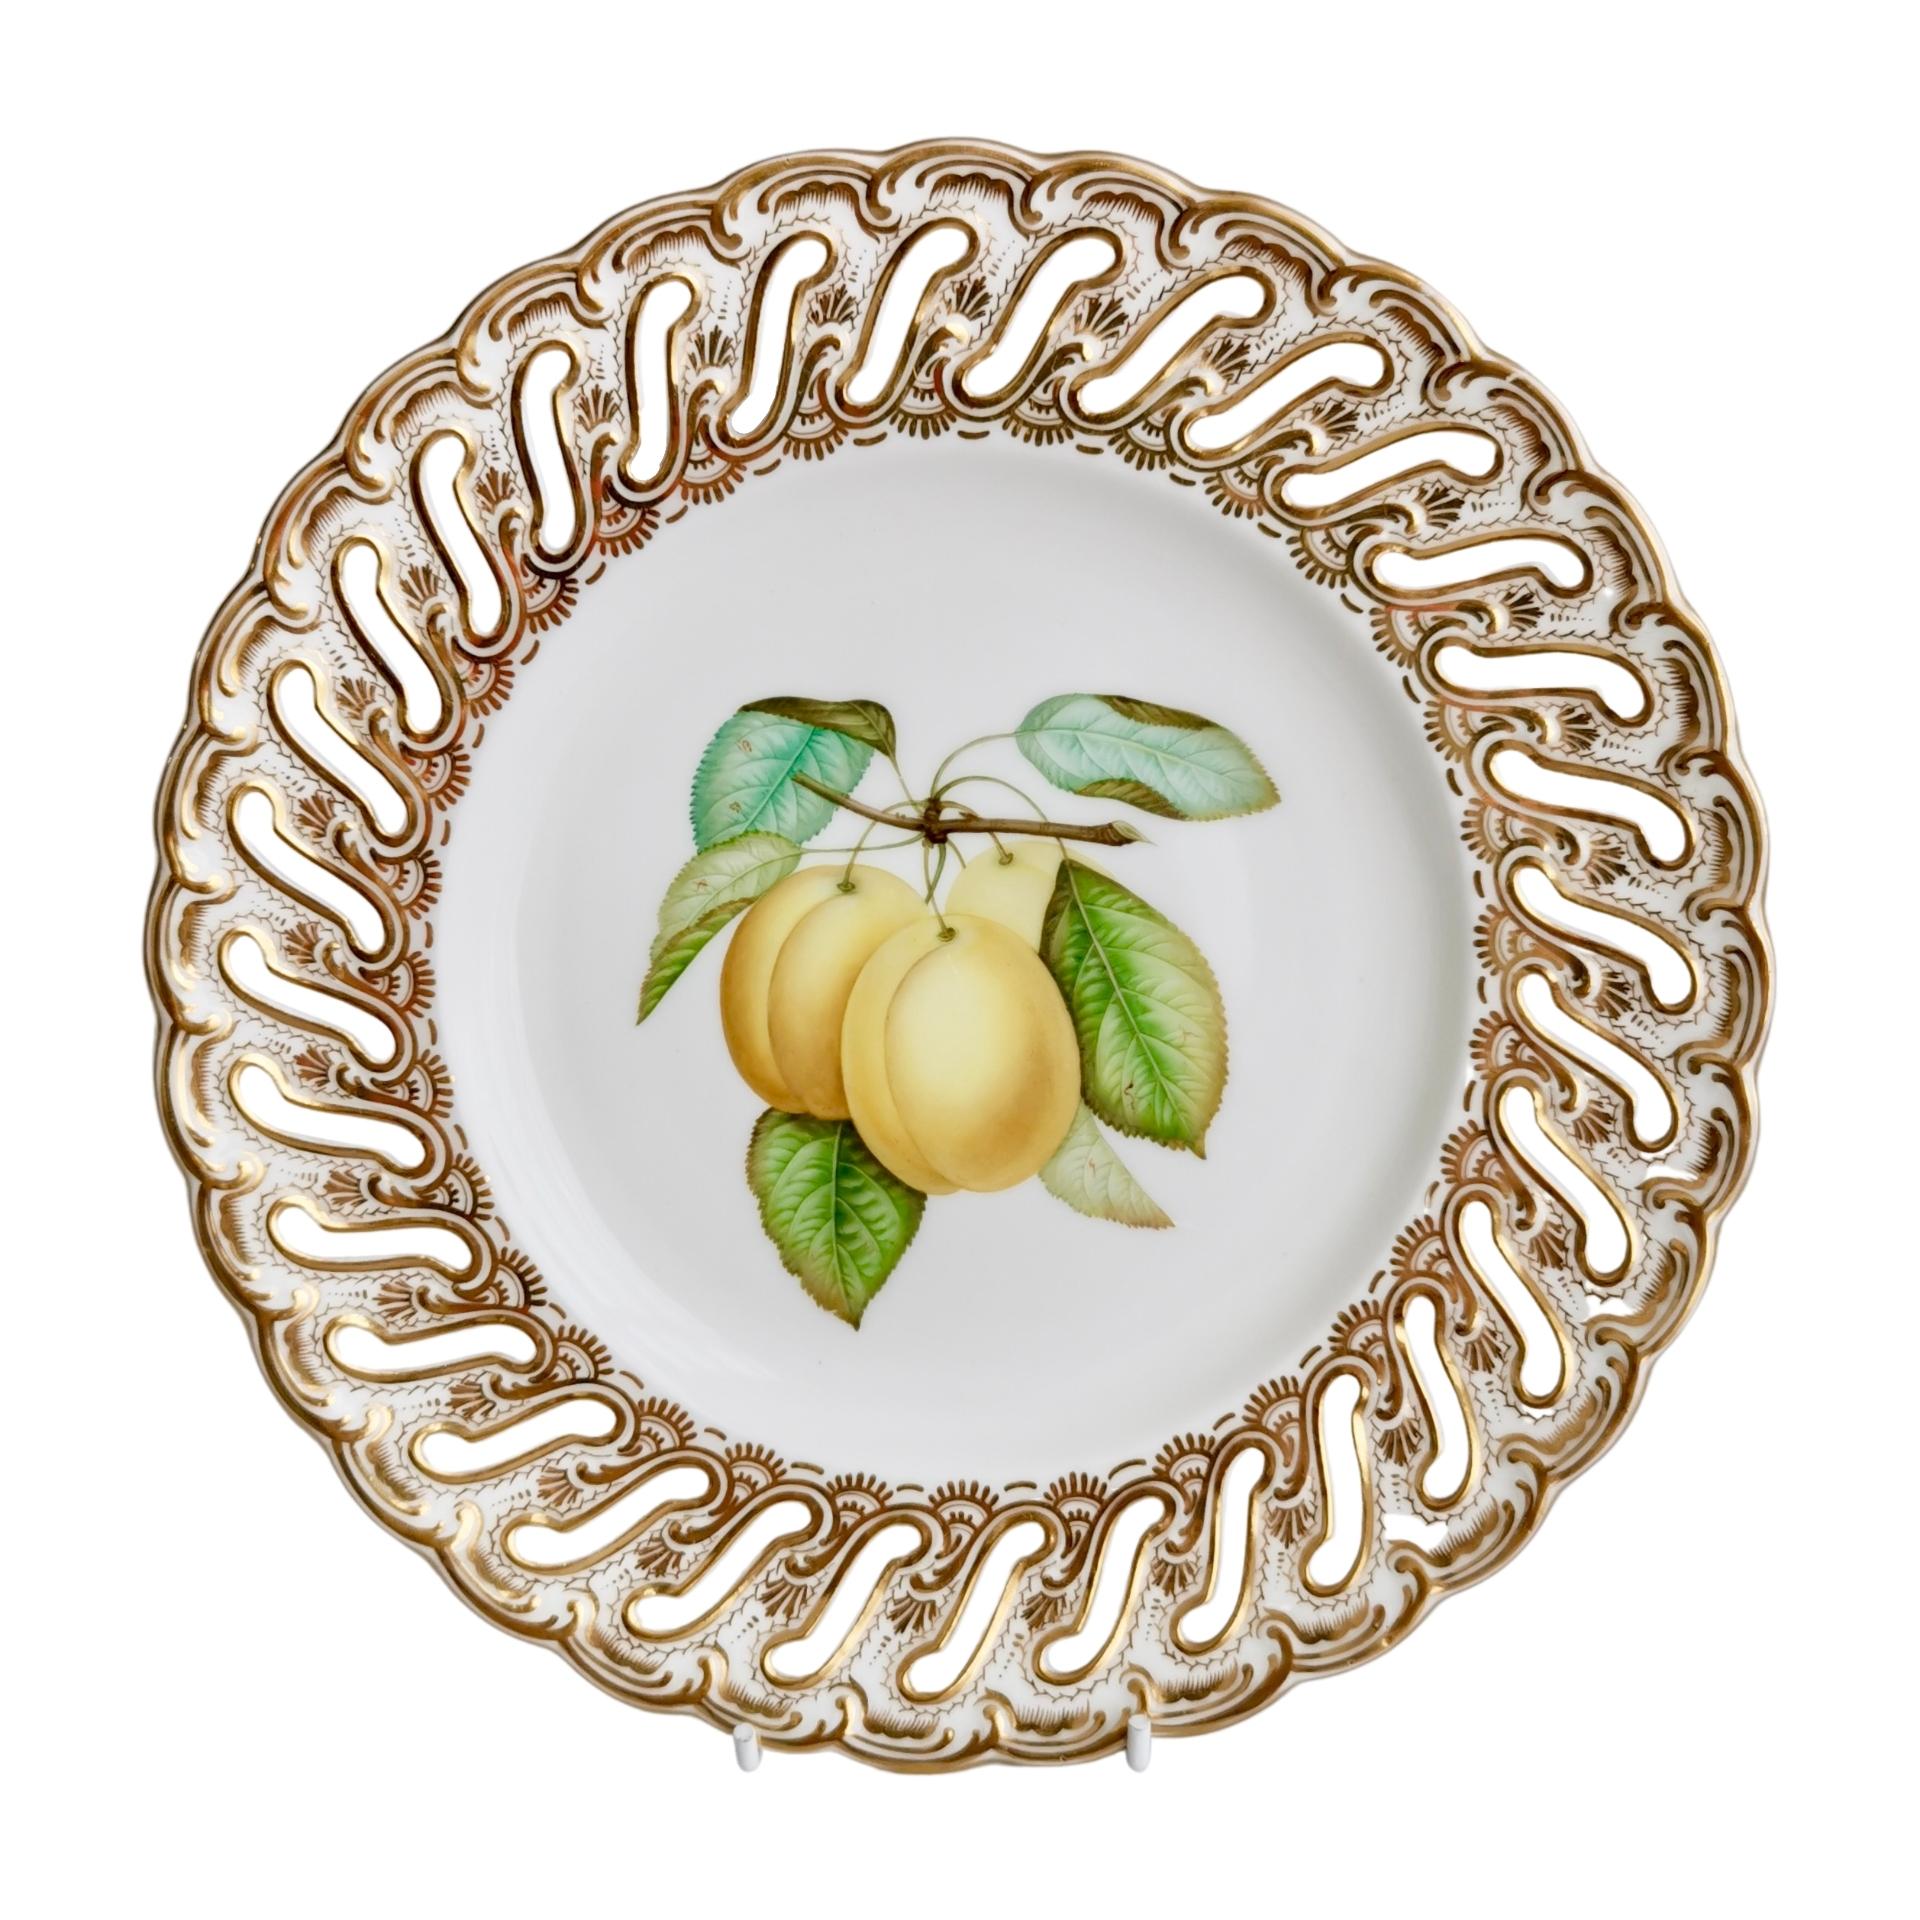 Coalport Porcelain Plate, Pierced Rim, Yellow Plums by William Cooke, 1850